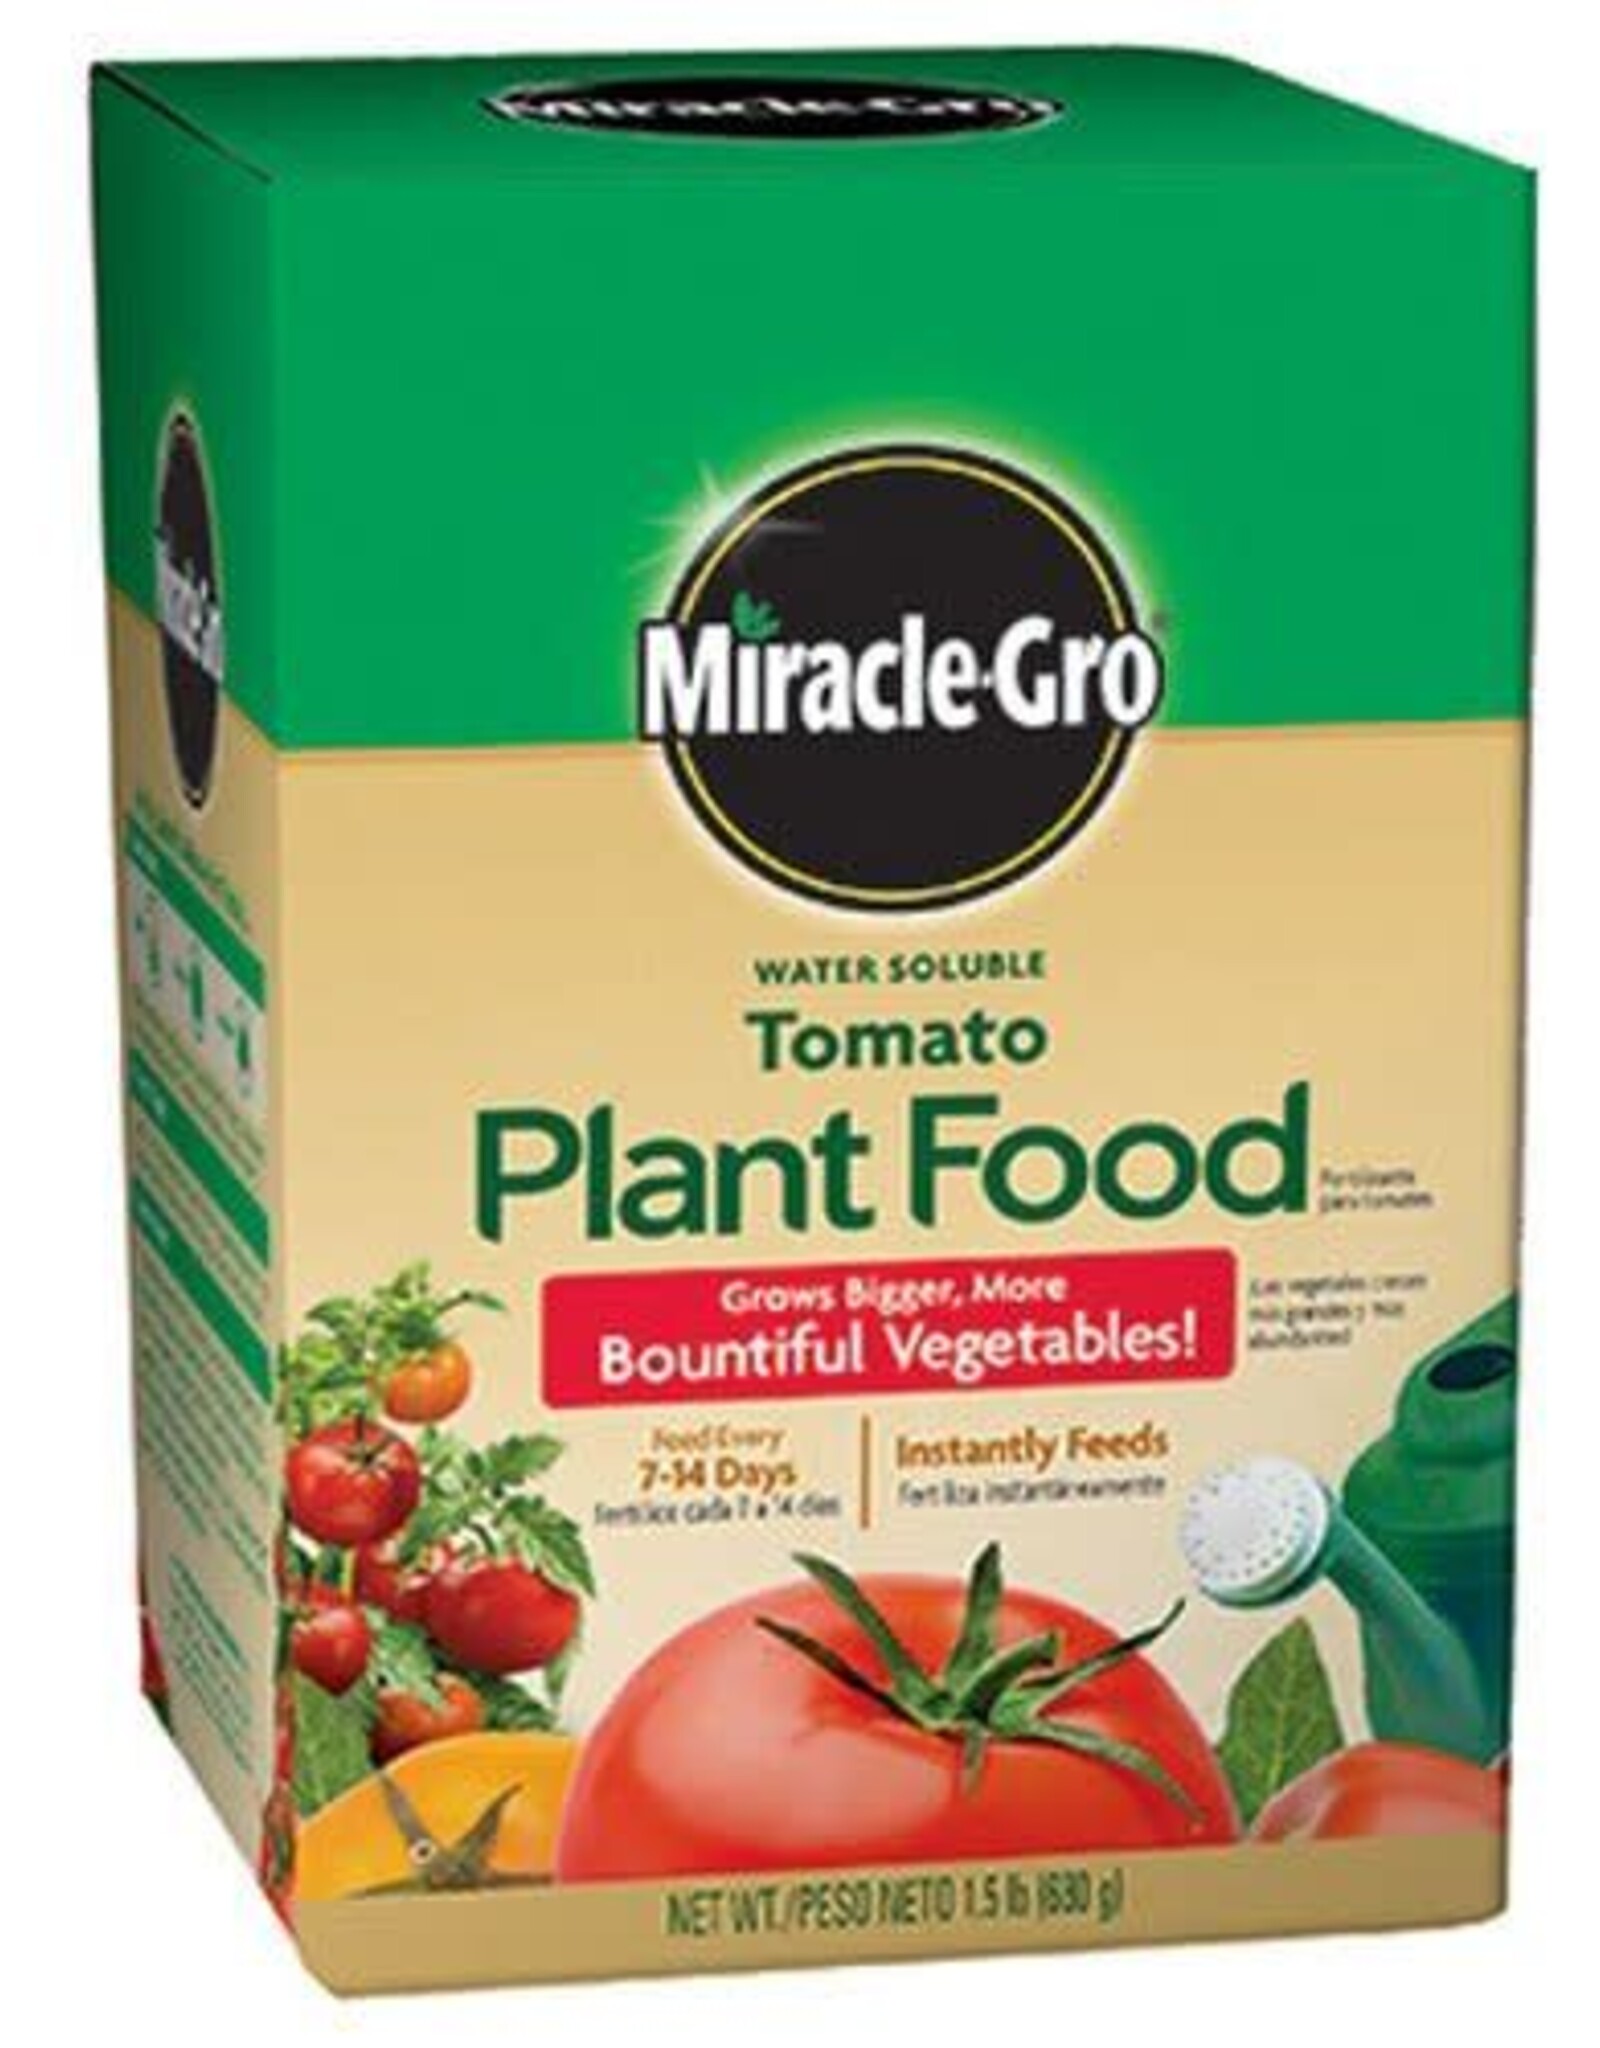 SCOTTS MIRACLE GRO PROD Miracle Gro 1.5# Tomato